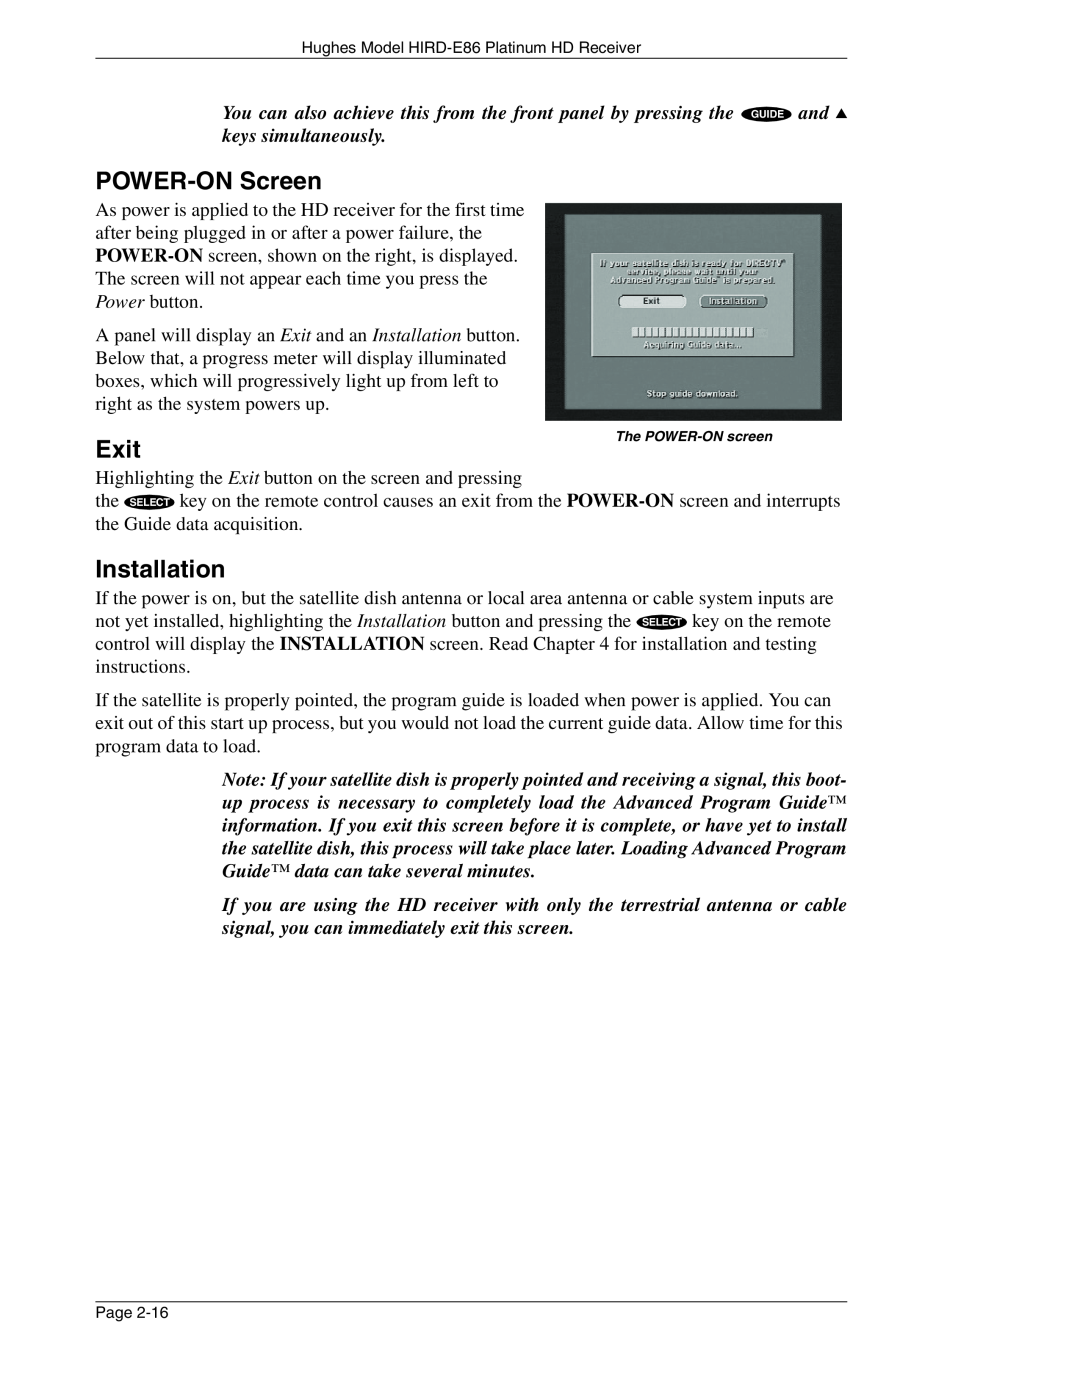 DirecTV HIRD-E86 manual POWER-ONScreen, Exit, Installation, The POWER-ONscreen 